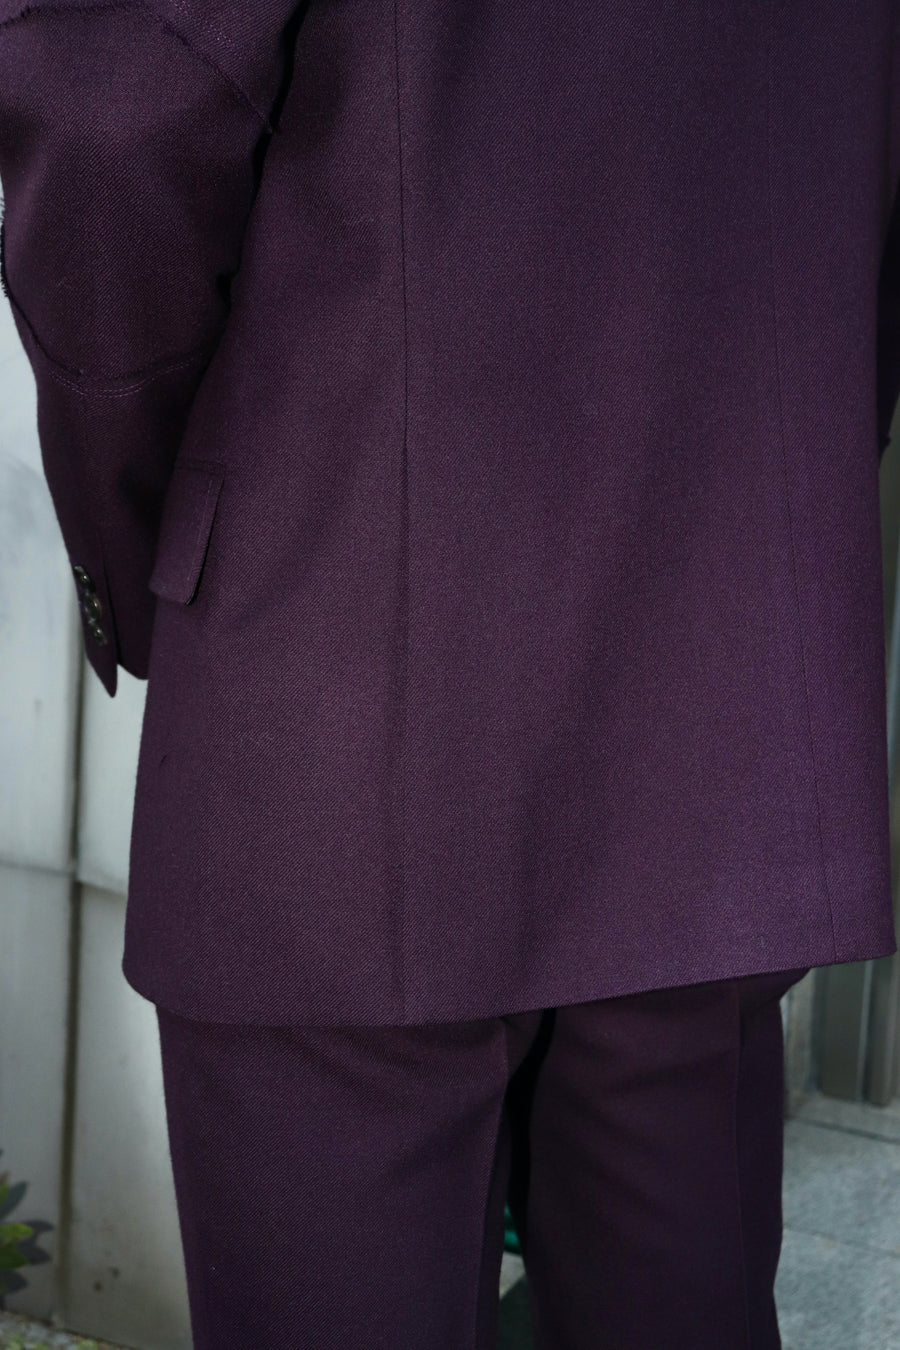 LITTLEBIG  Cut Jacket(Purple)